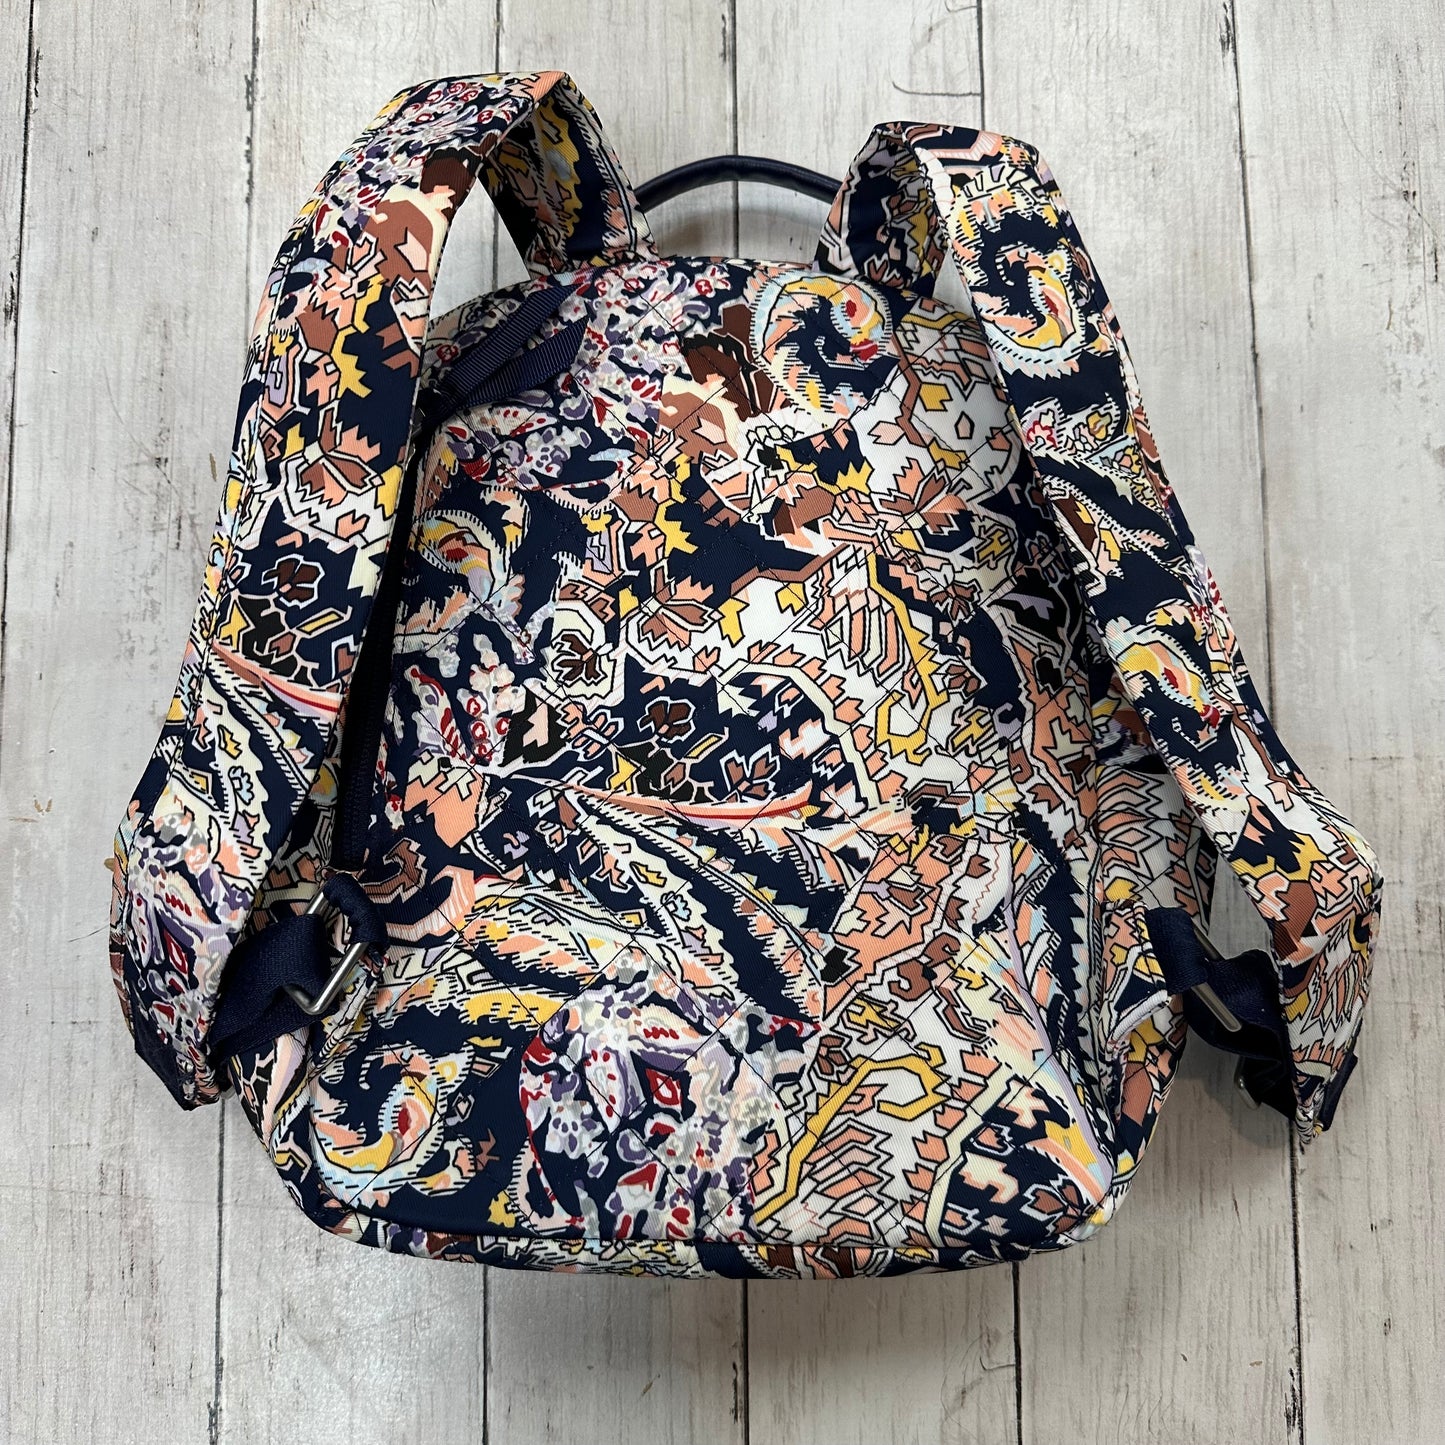 Backpack By Vera Bradley  Size: Medium